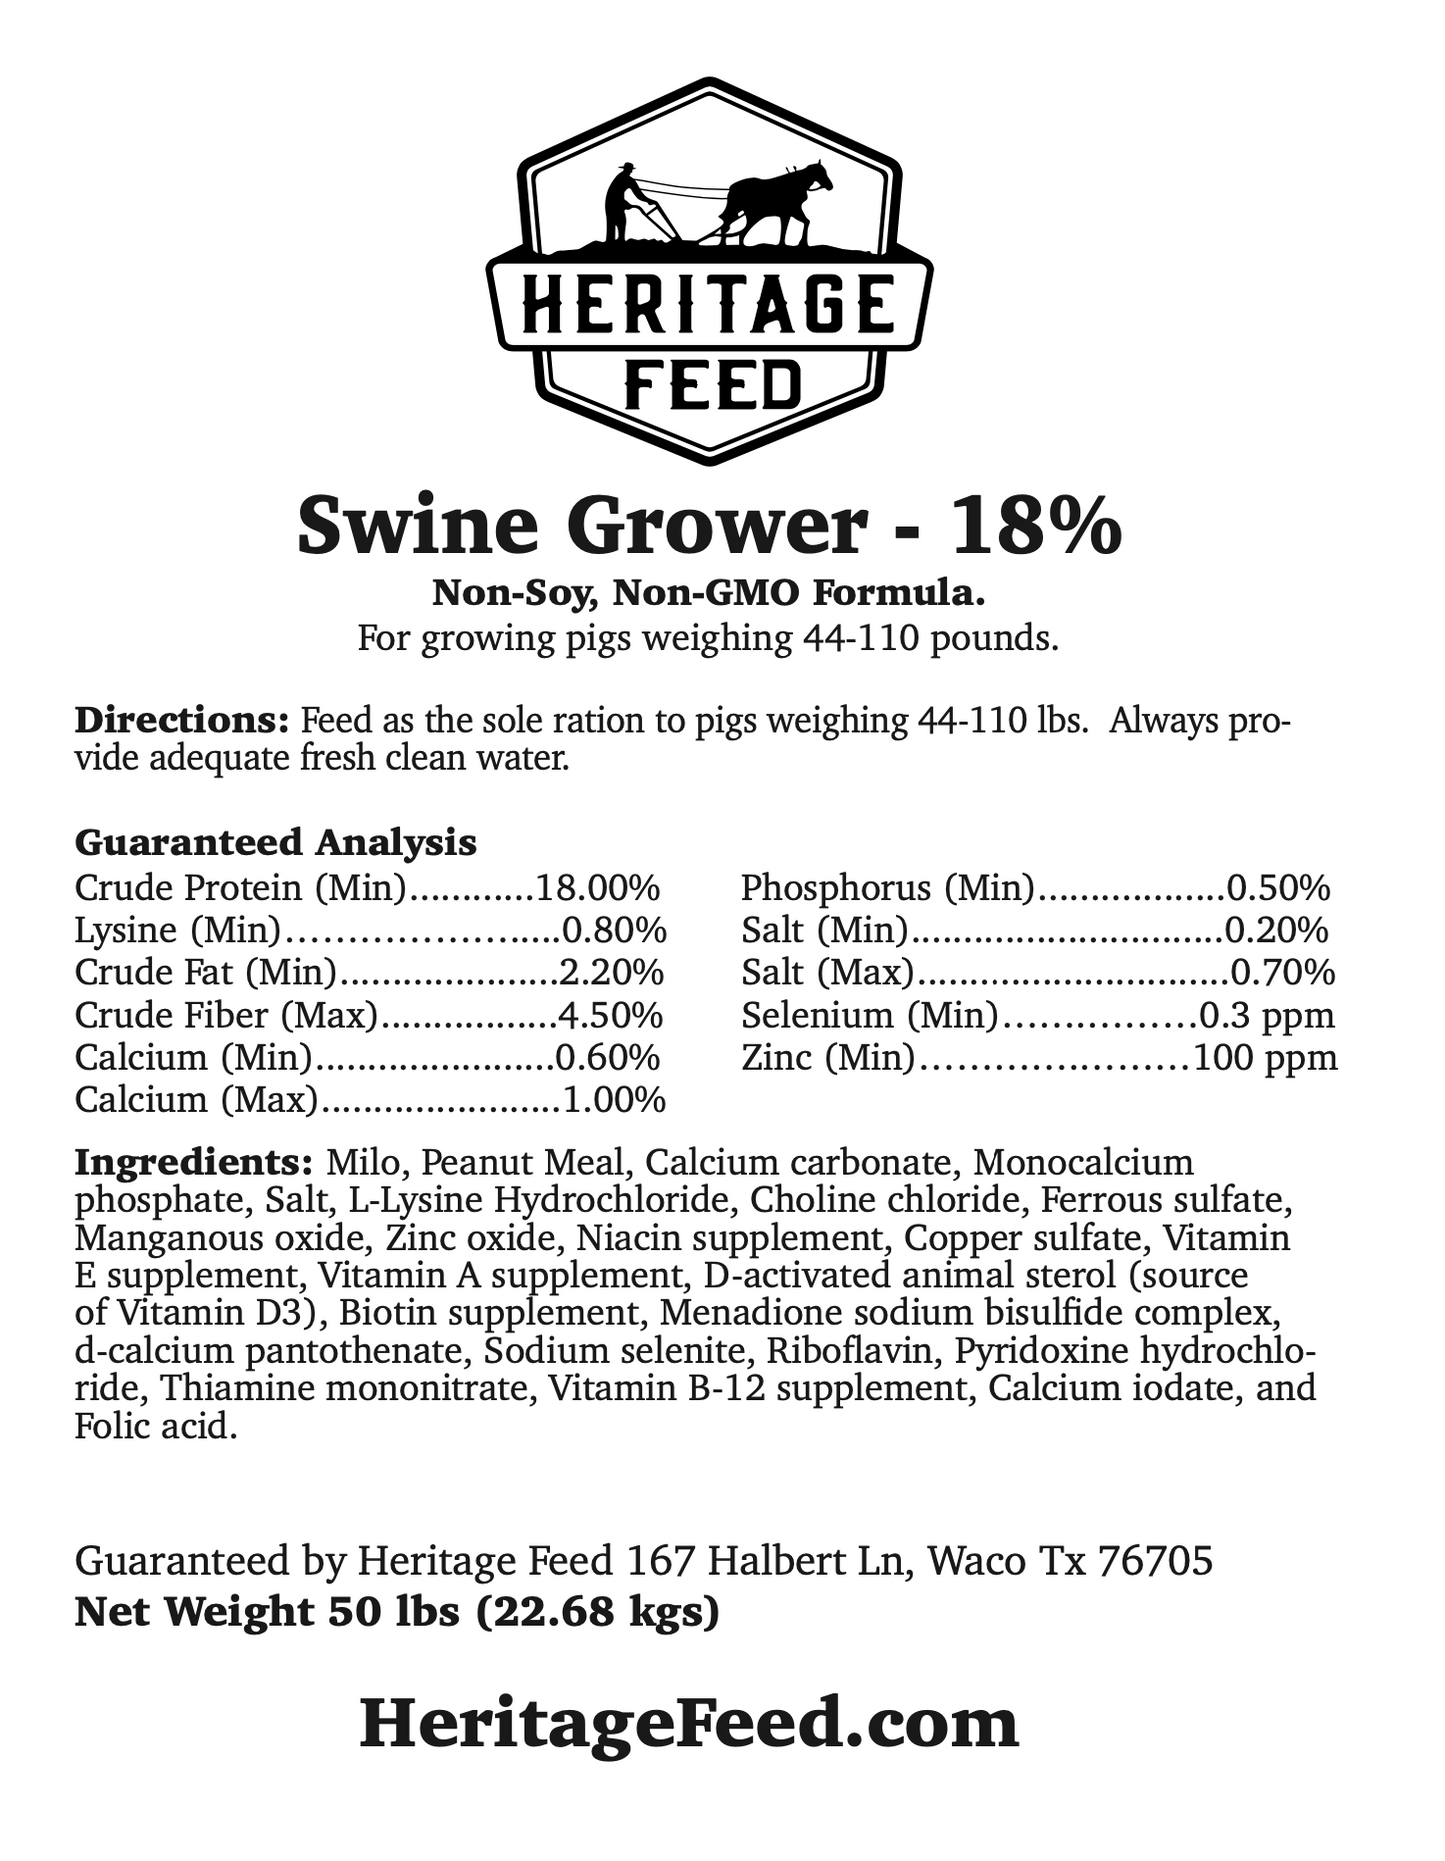 NON-GMO Swine Grower